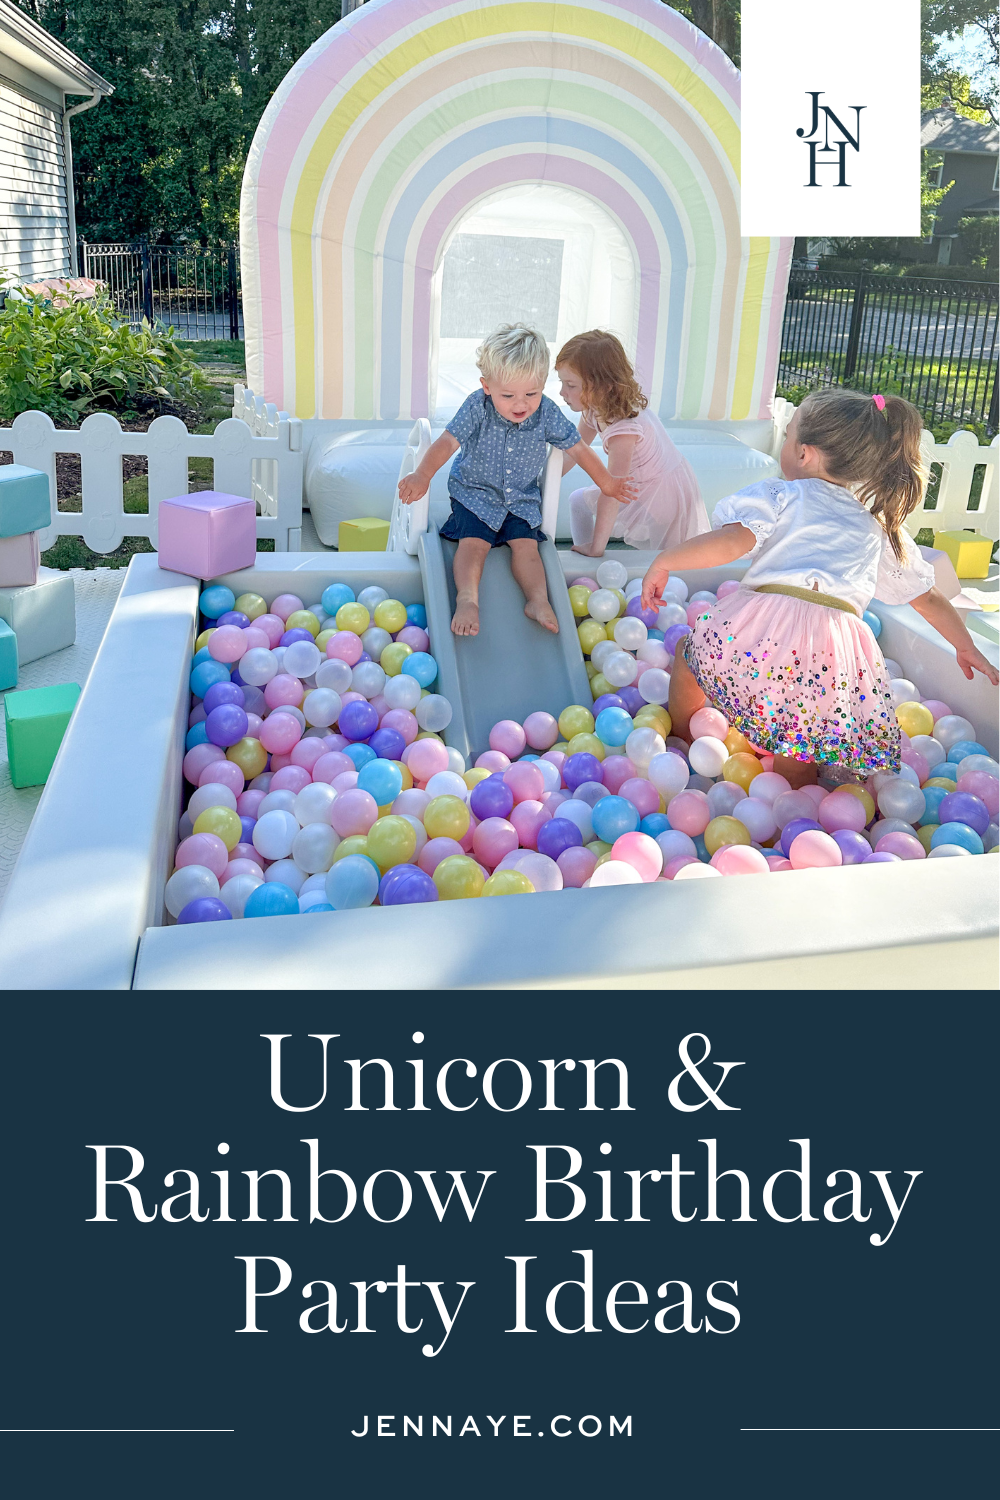 Rainbow / Birthday Shine Bright Rainbow Party